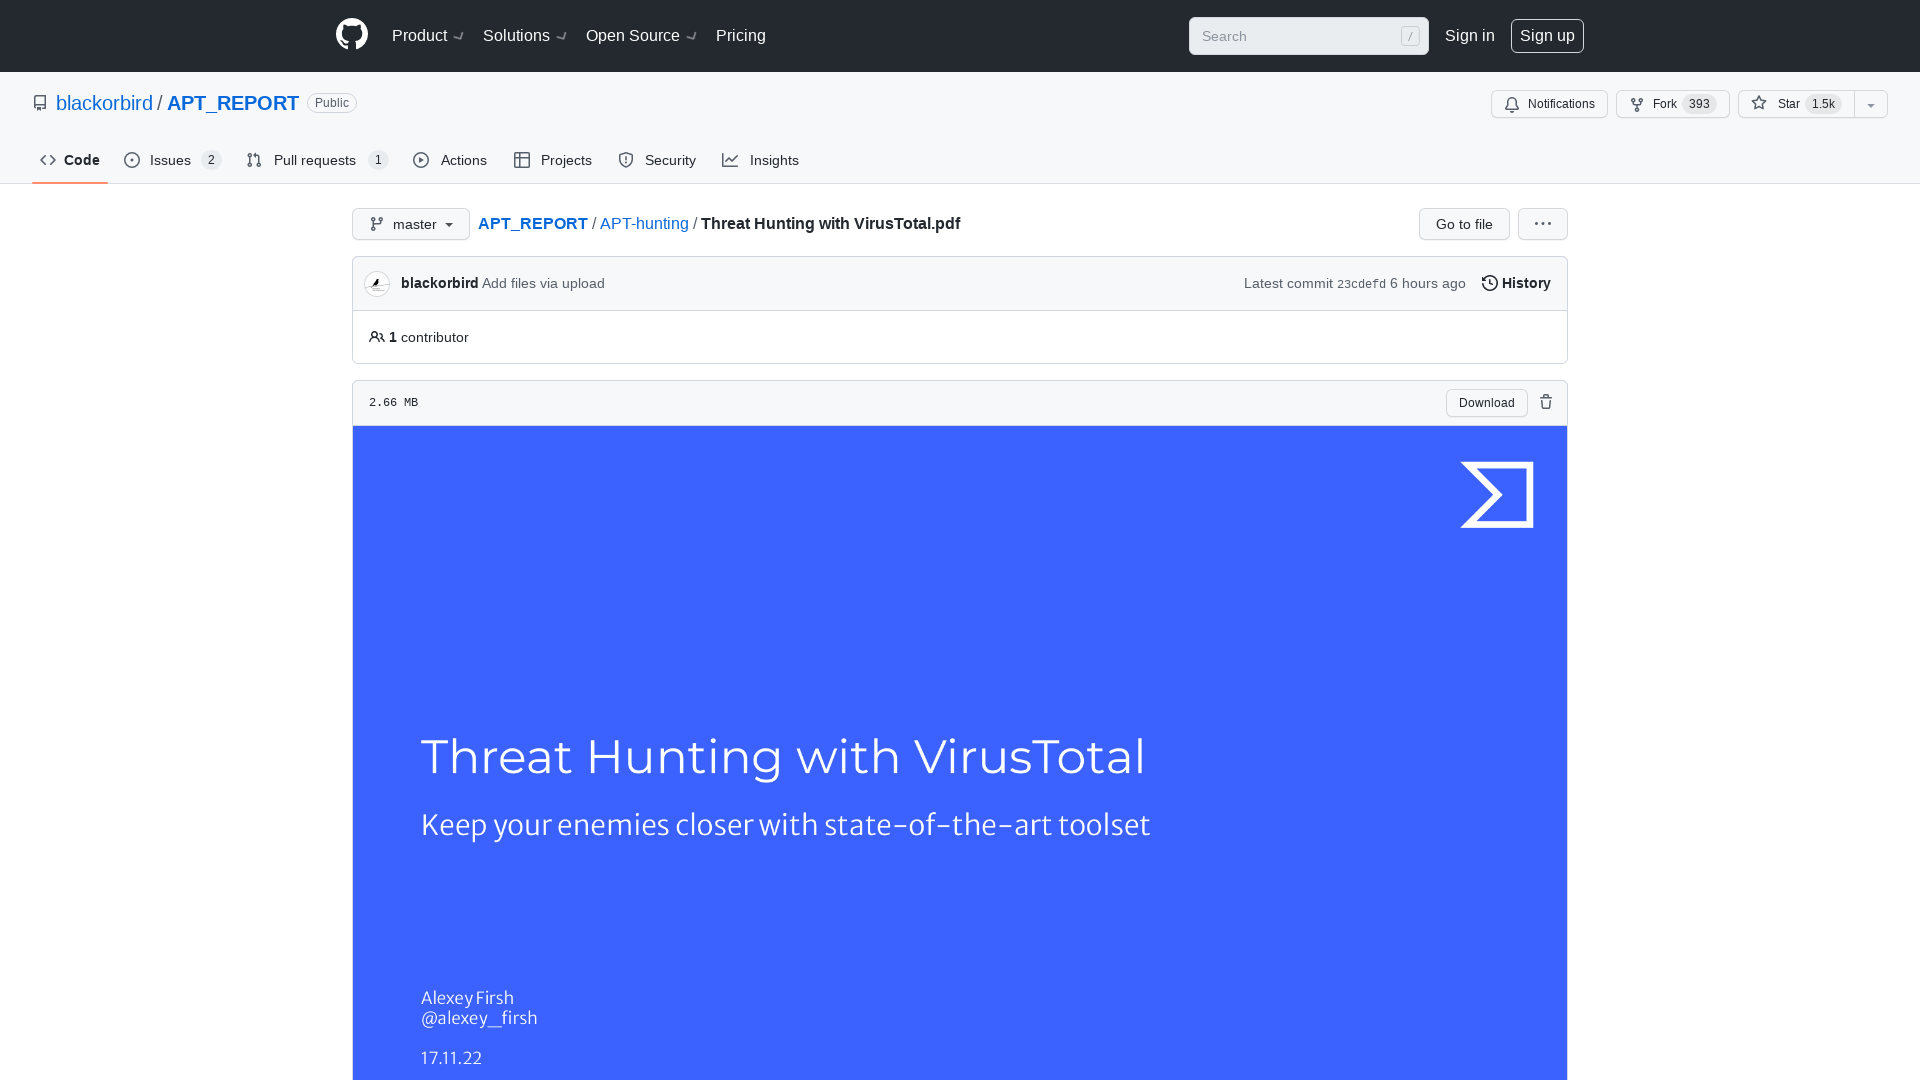 APT_REPORT/Threat Hunting with VirusTotal.pdf at master · blackorbird/APT_REPORT · GitHub